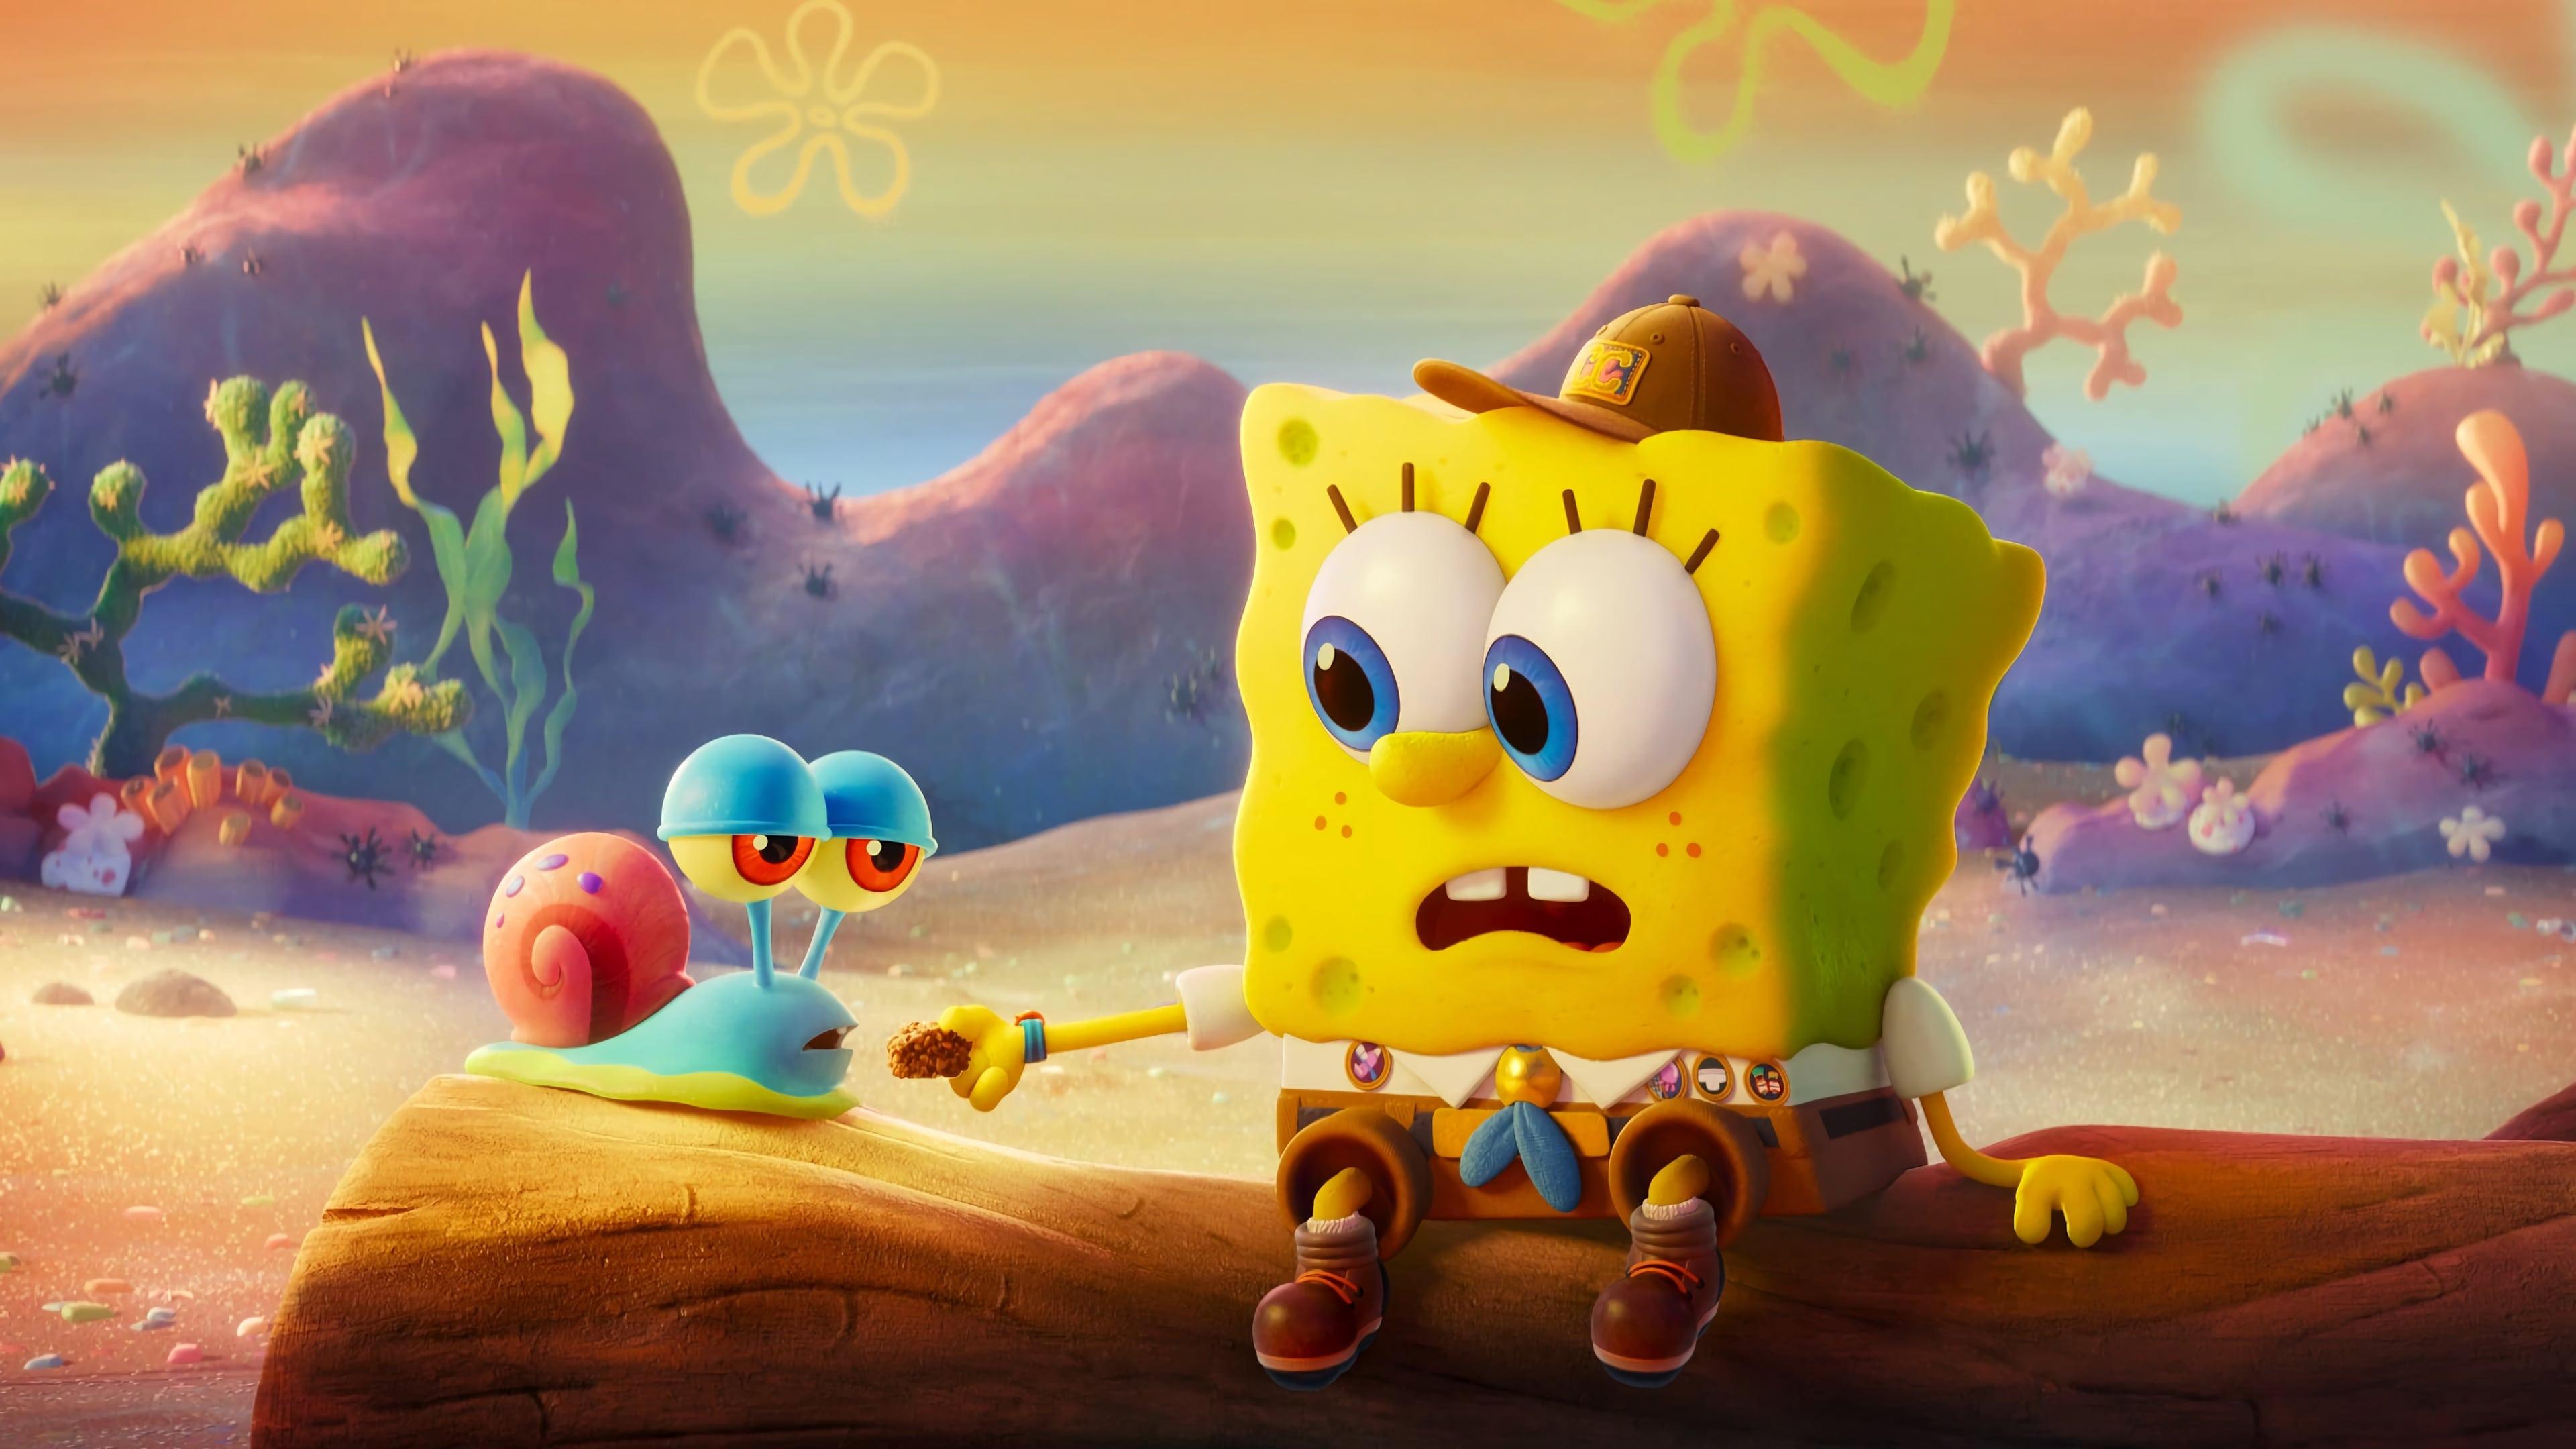 SpongeBob & Friends: Patrick SquarePants backdrop